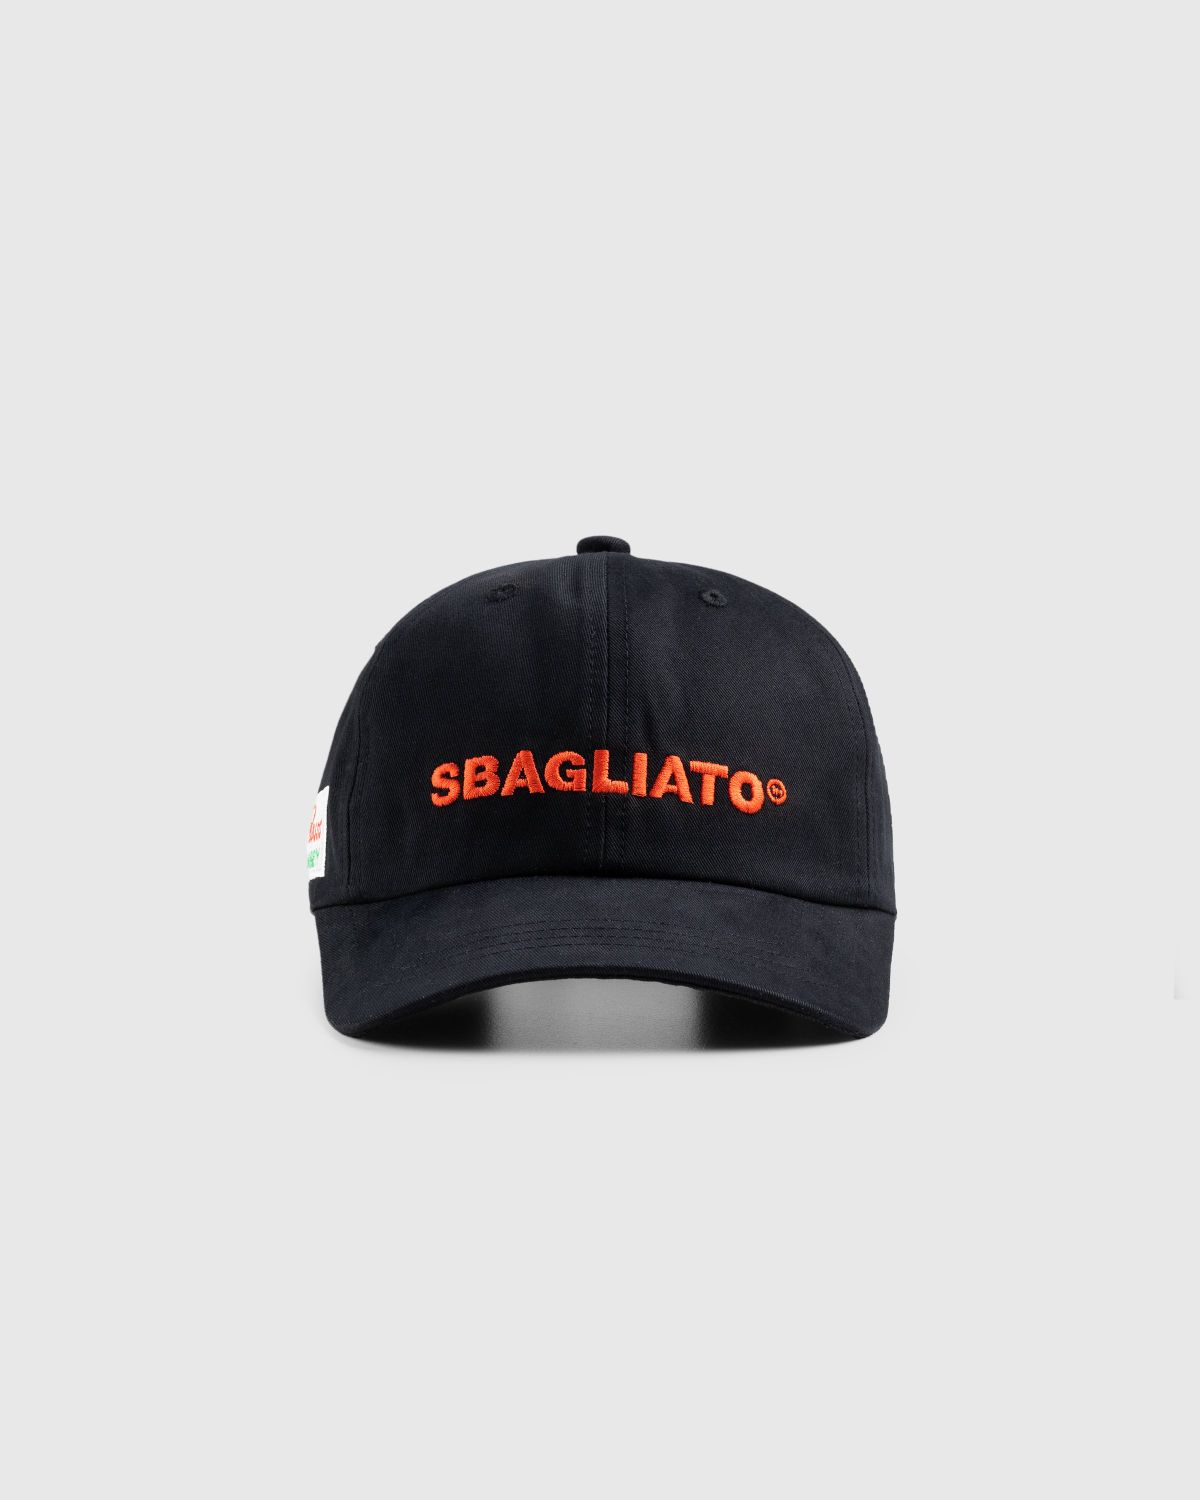 Bar Basso x Highsnobiety – Sbagliato Cap Black - Hats - Black - Image 2